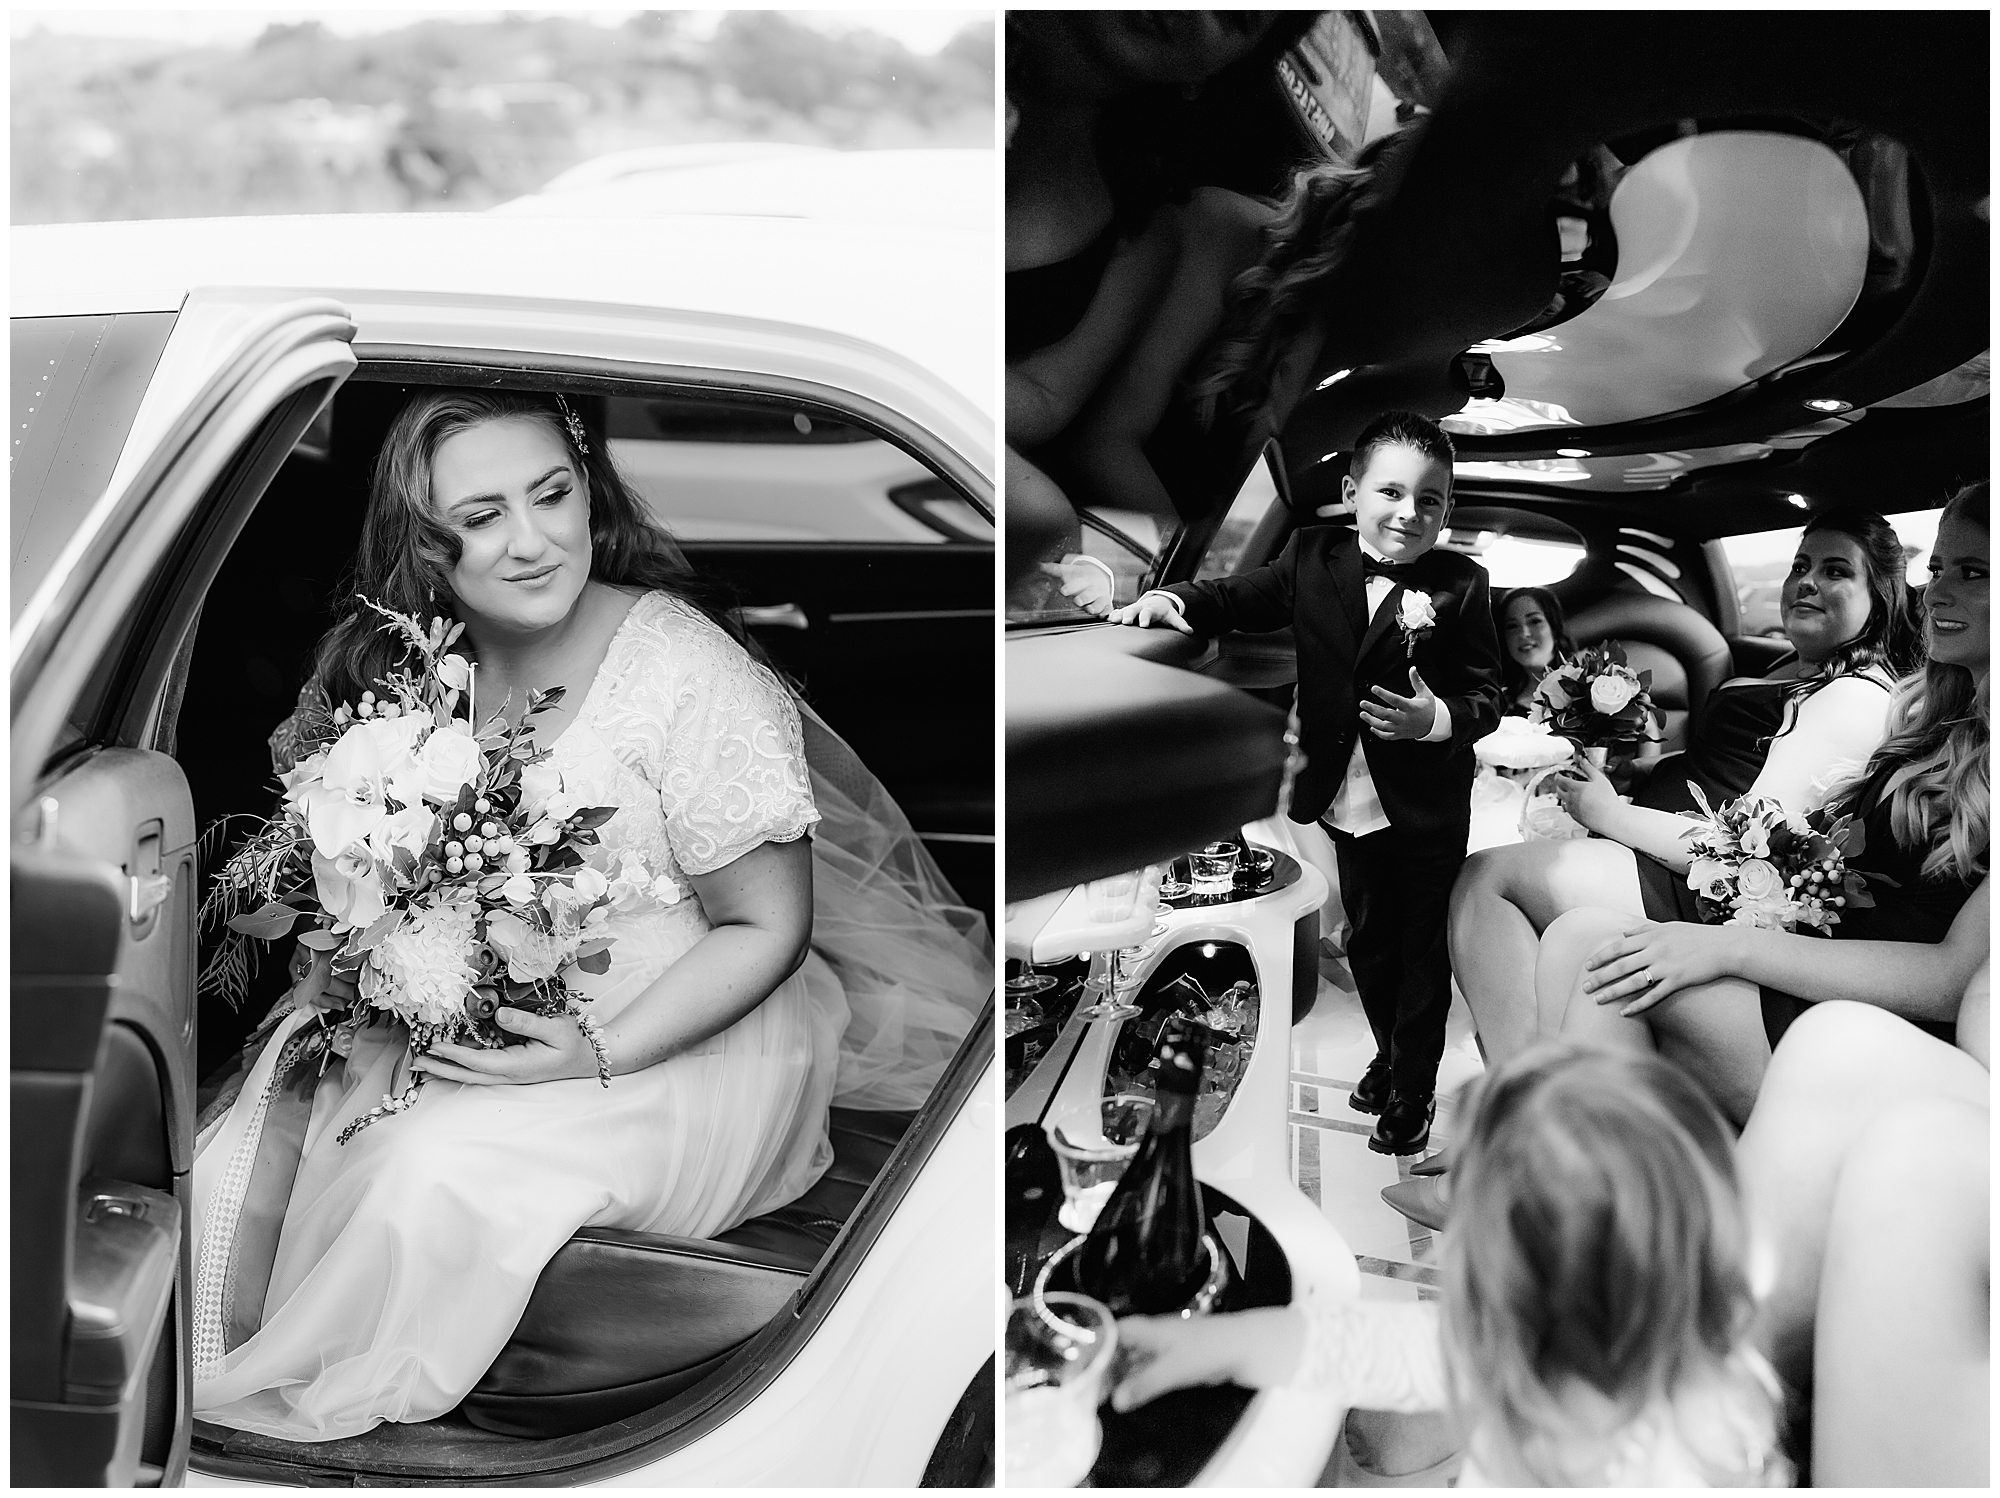 Canberra wedding photography, Canberra wedding, Zinette Hopper Photography, Best wedding photographer, australian wedding photographer, wedding photographer australia, elopement photographer, elopement photographer canberra.